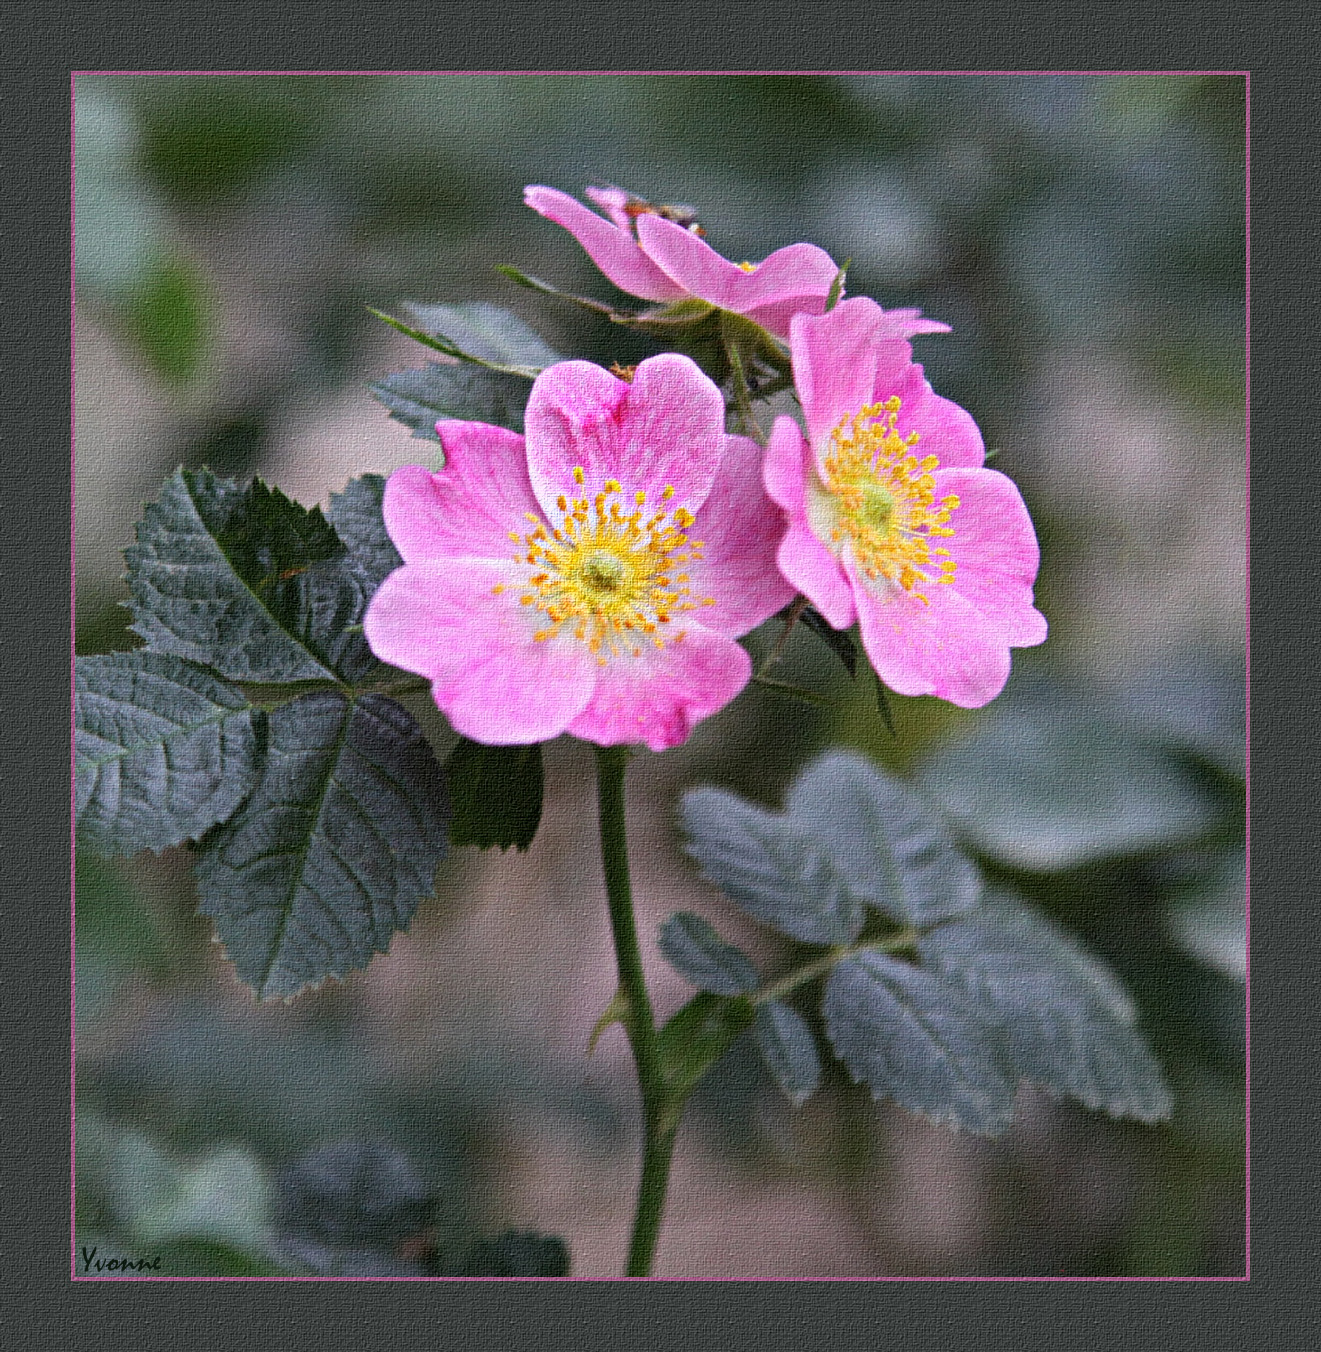 Sweet Briar Rose (Rosa rubiginosa )